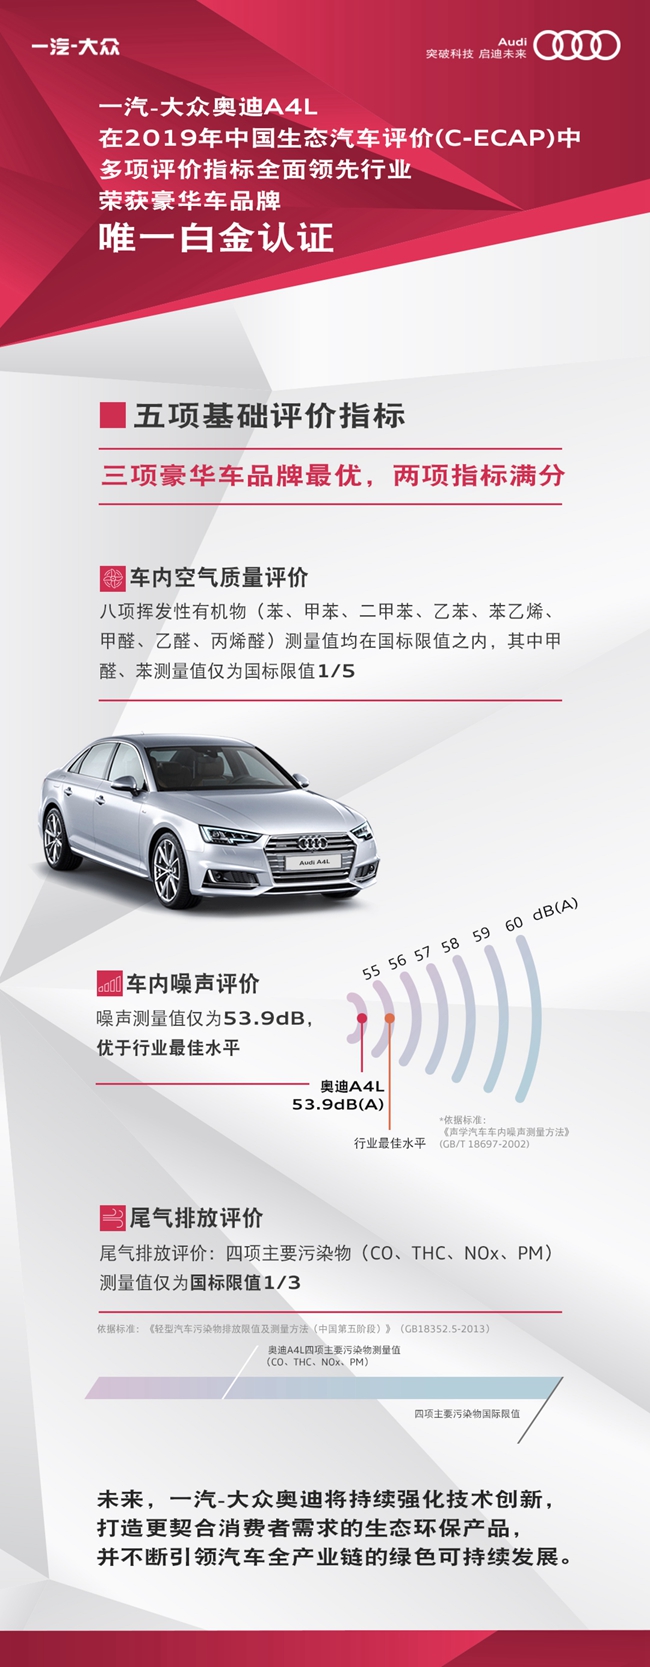 a 一汽-大众奥迪A4L在2019年中国生态汽车评价中多项评价指标全面领先行业，荣获豪华车品牌唯一白金认证.jpg